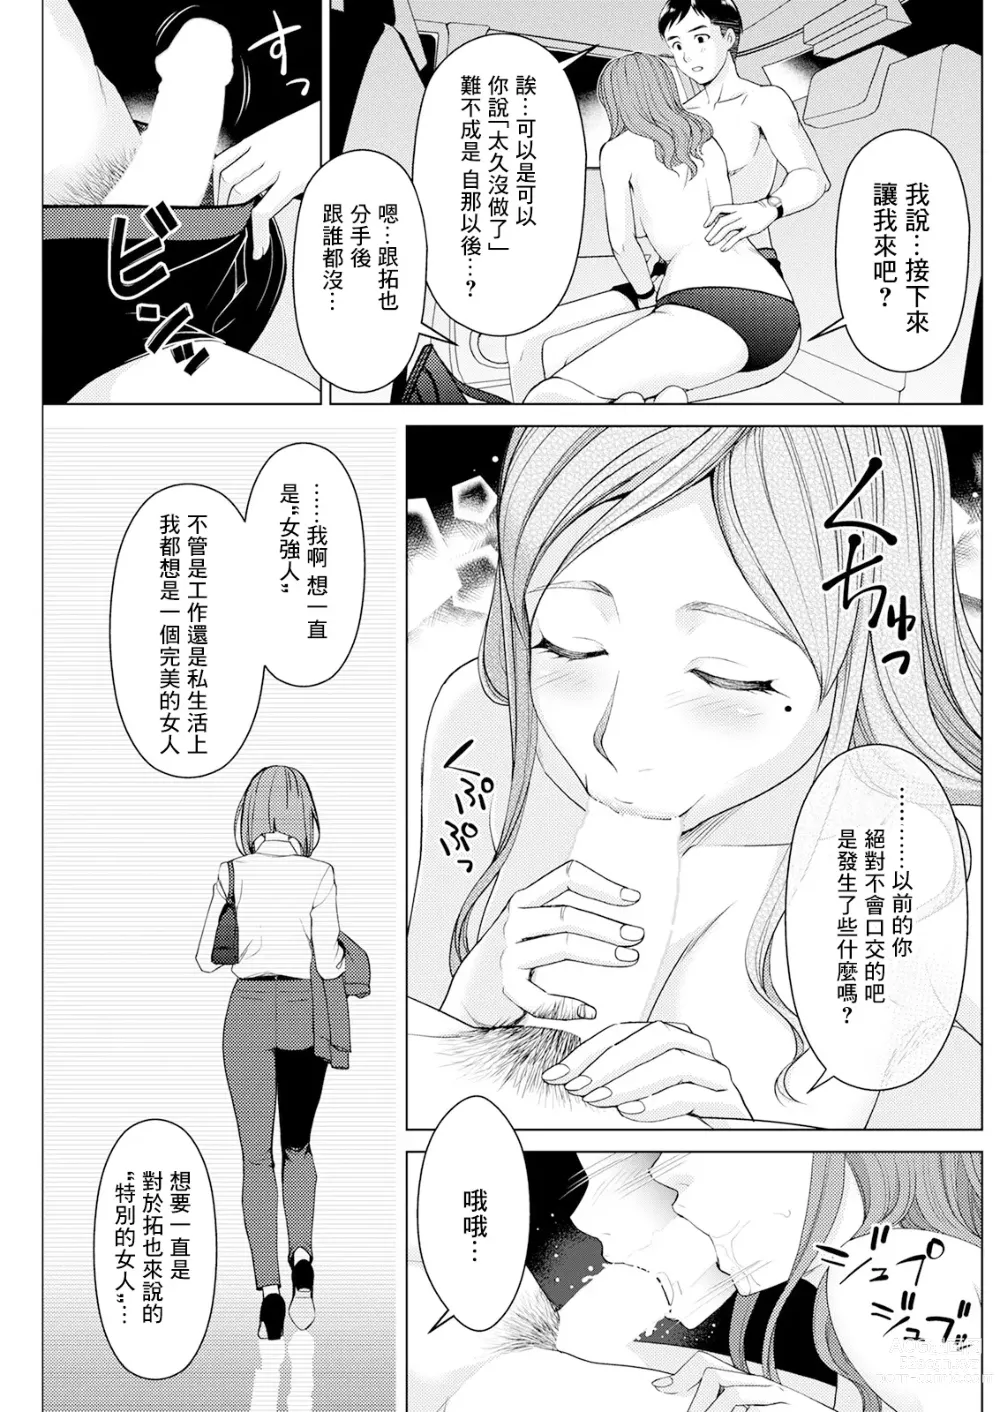 Page 9 of manga Kawari, Hateru.